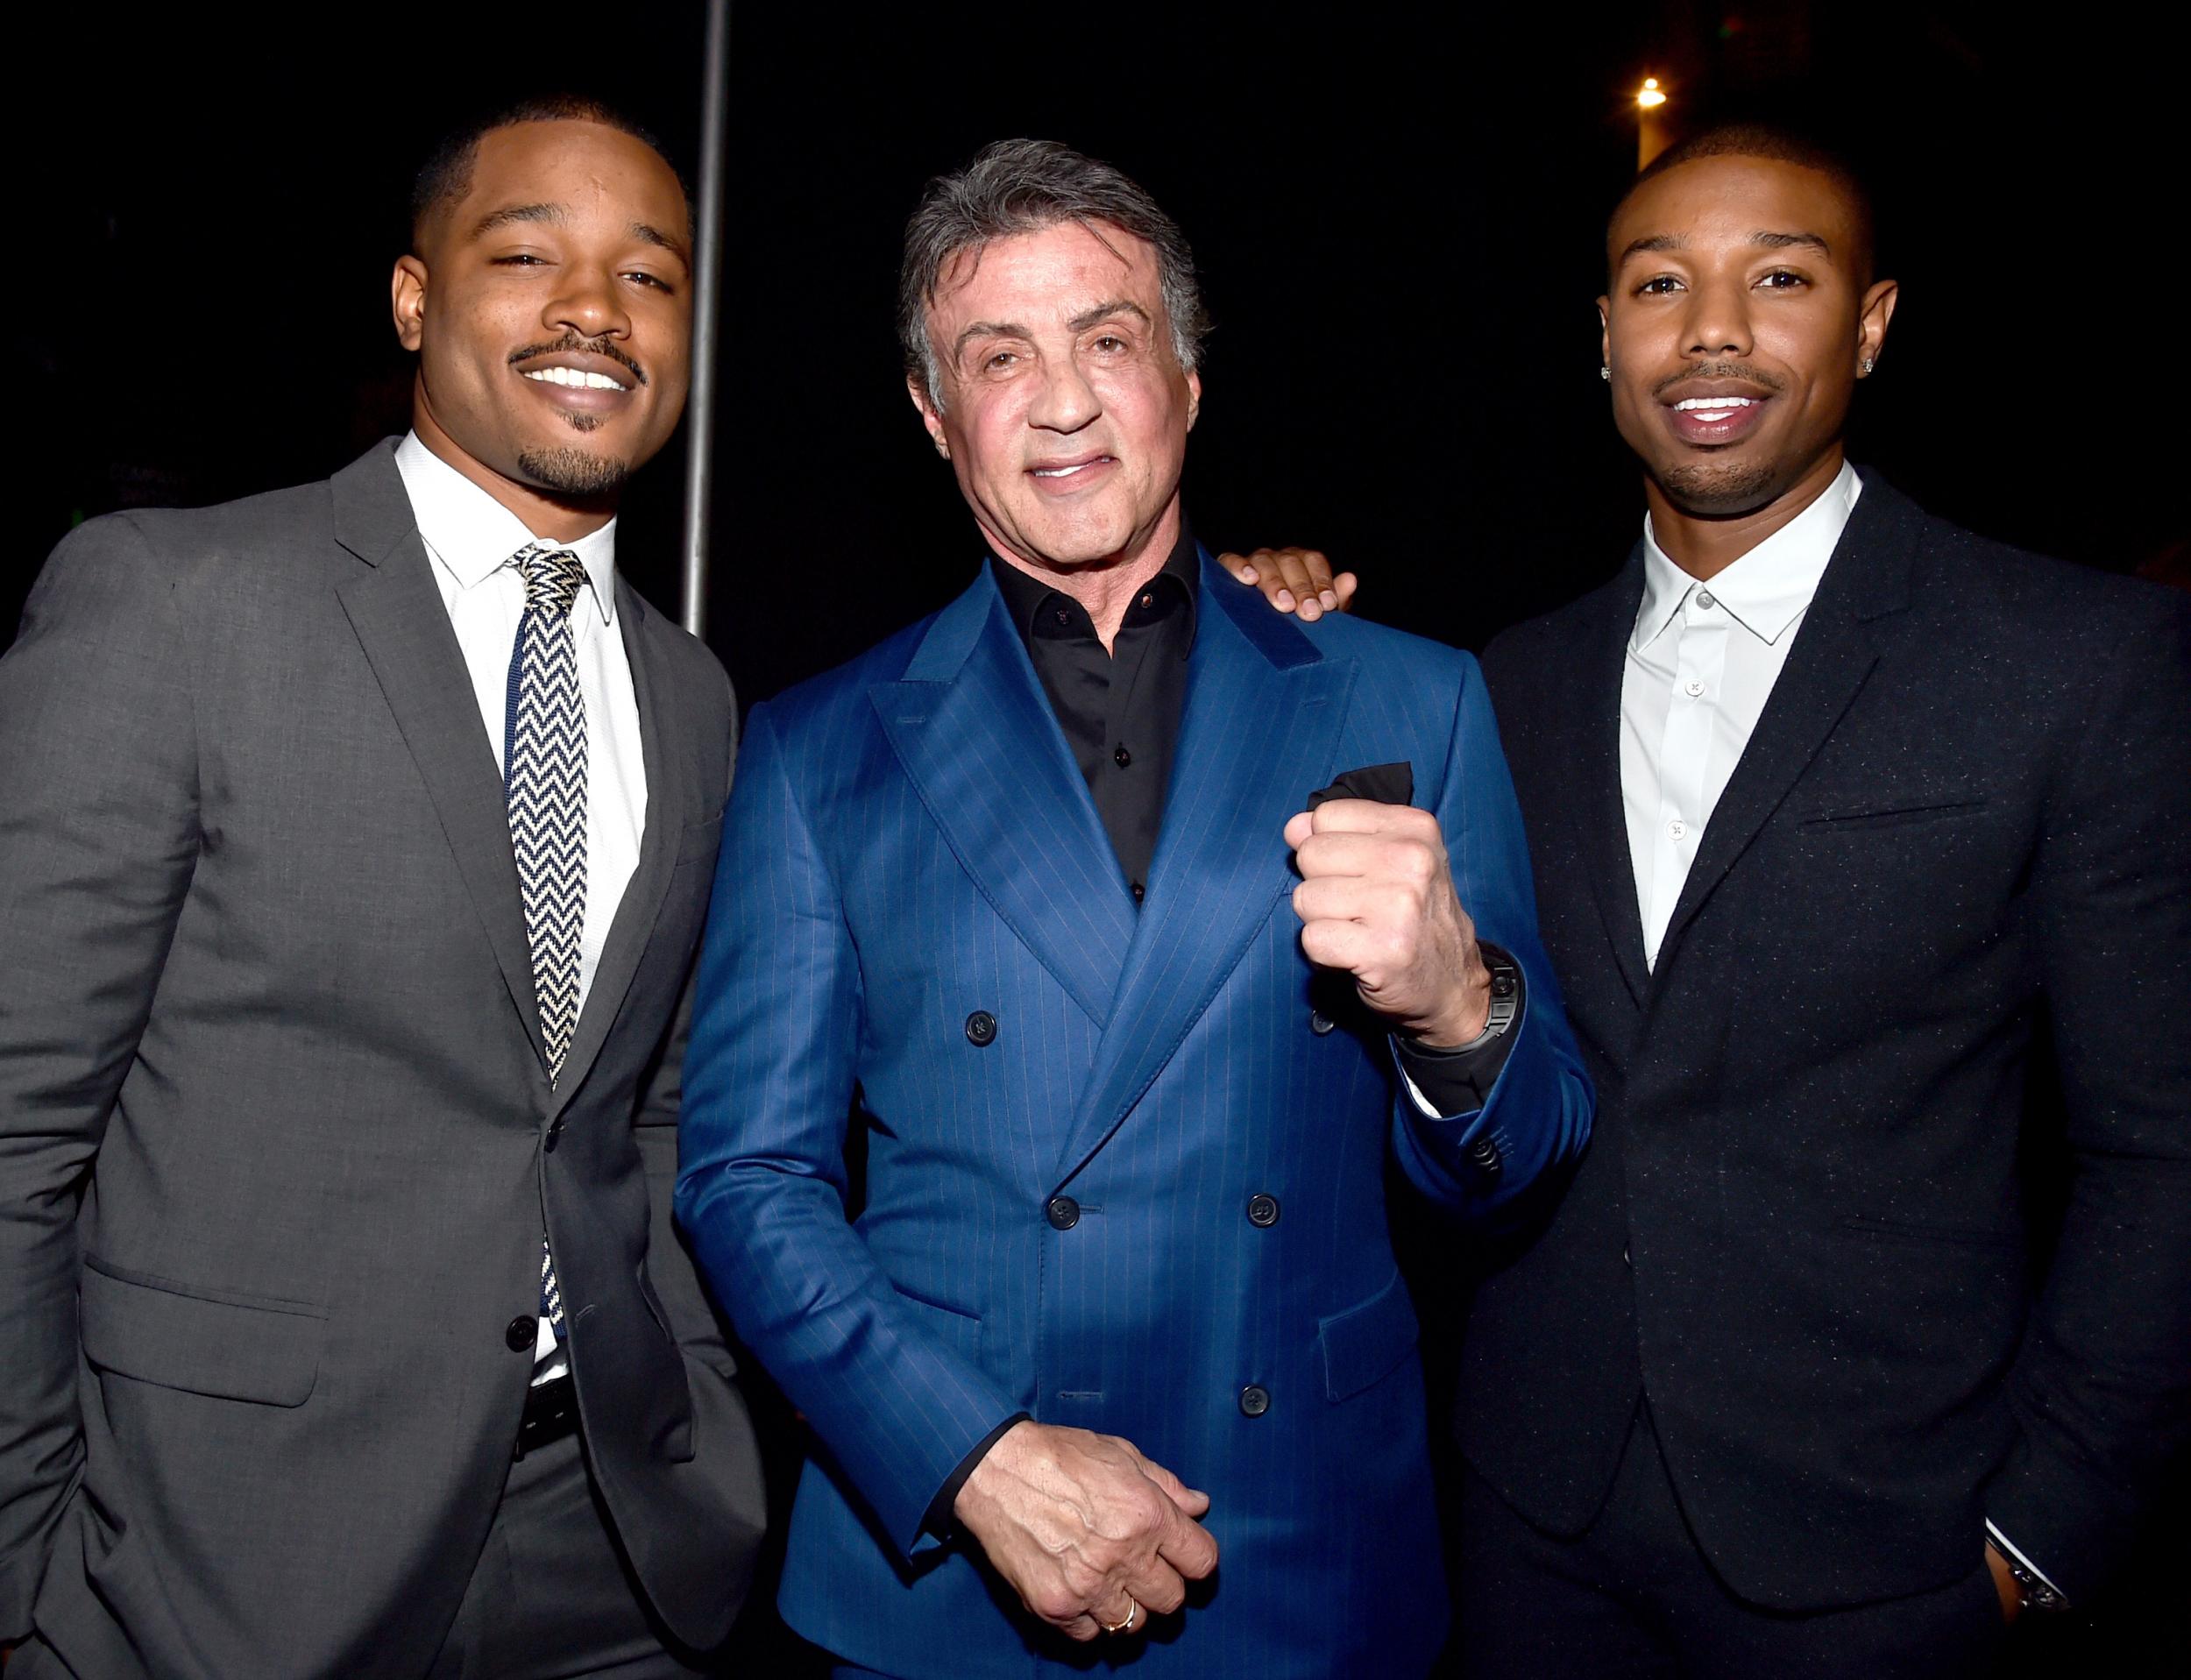 Creed's director Ryan Coogler and stars Sylvester Stallone and Michael B. Jordan